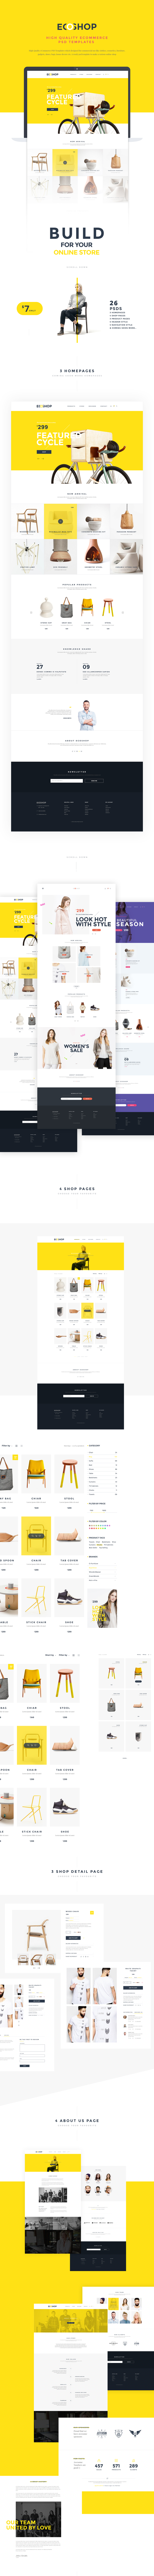 online store Shopping shop Ecommerce estore Website wedesign furniture